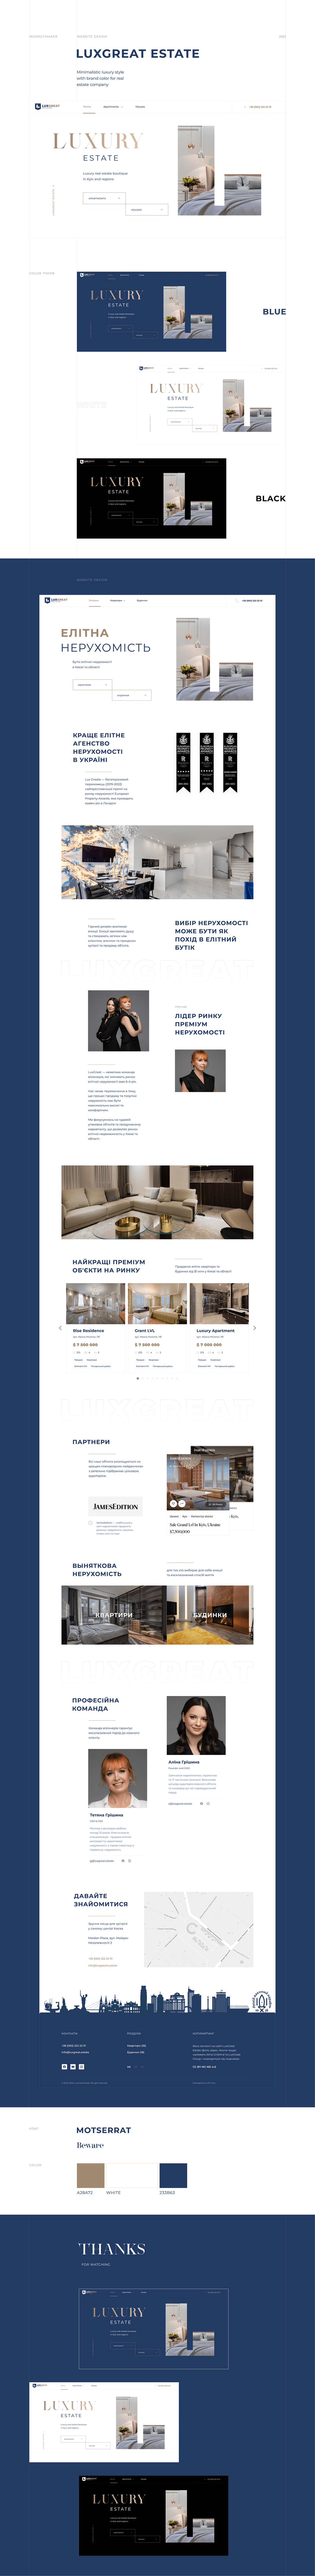 Design site for real estate company